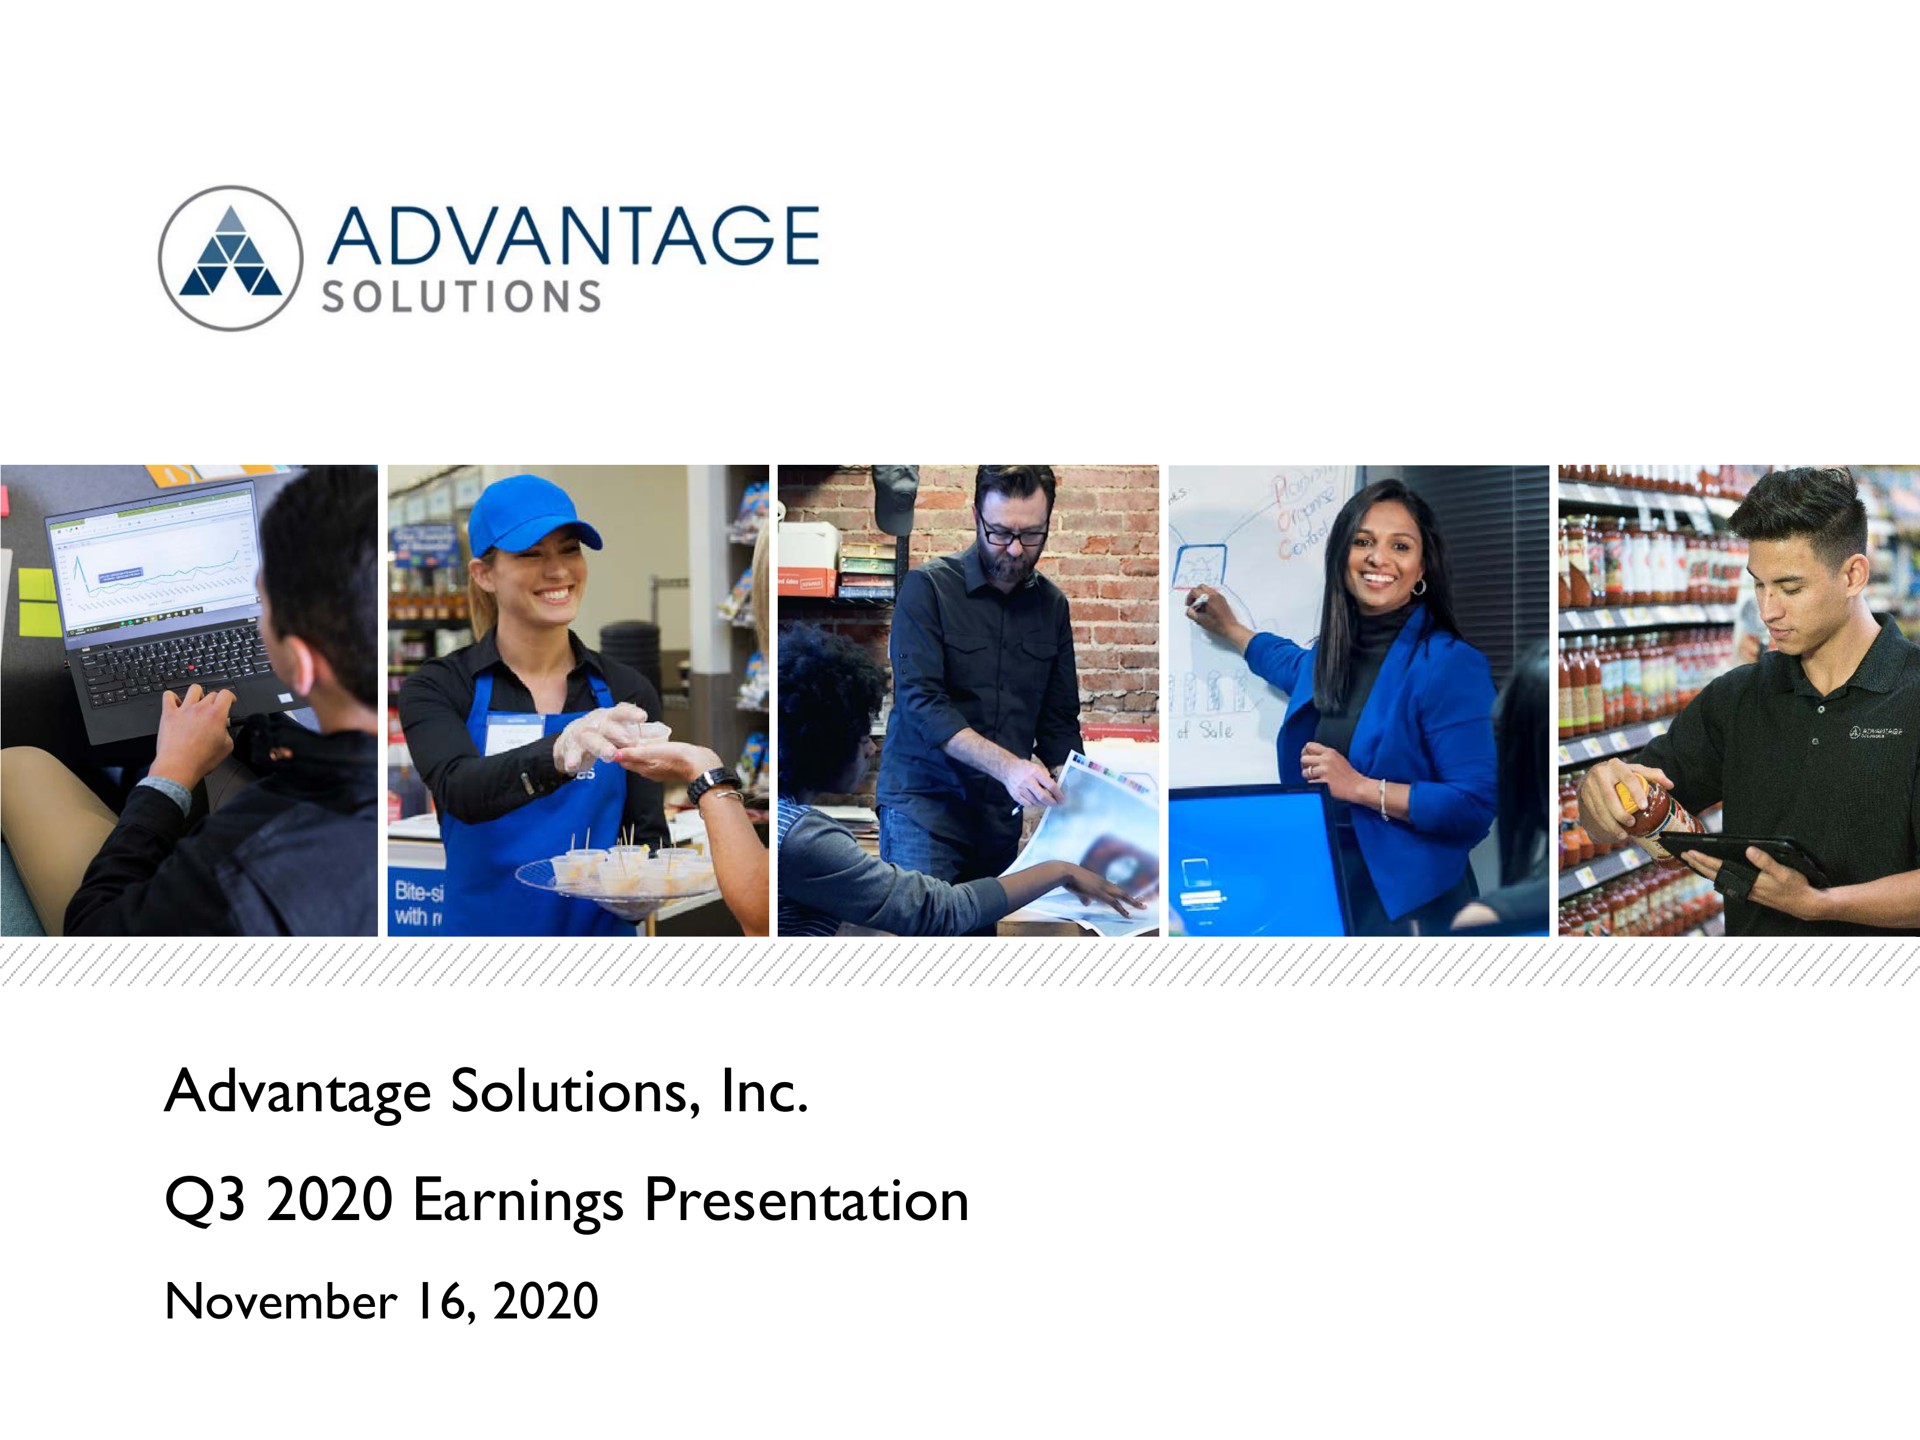 advantage solutions earnings presentation he | Advantage Solutions